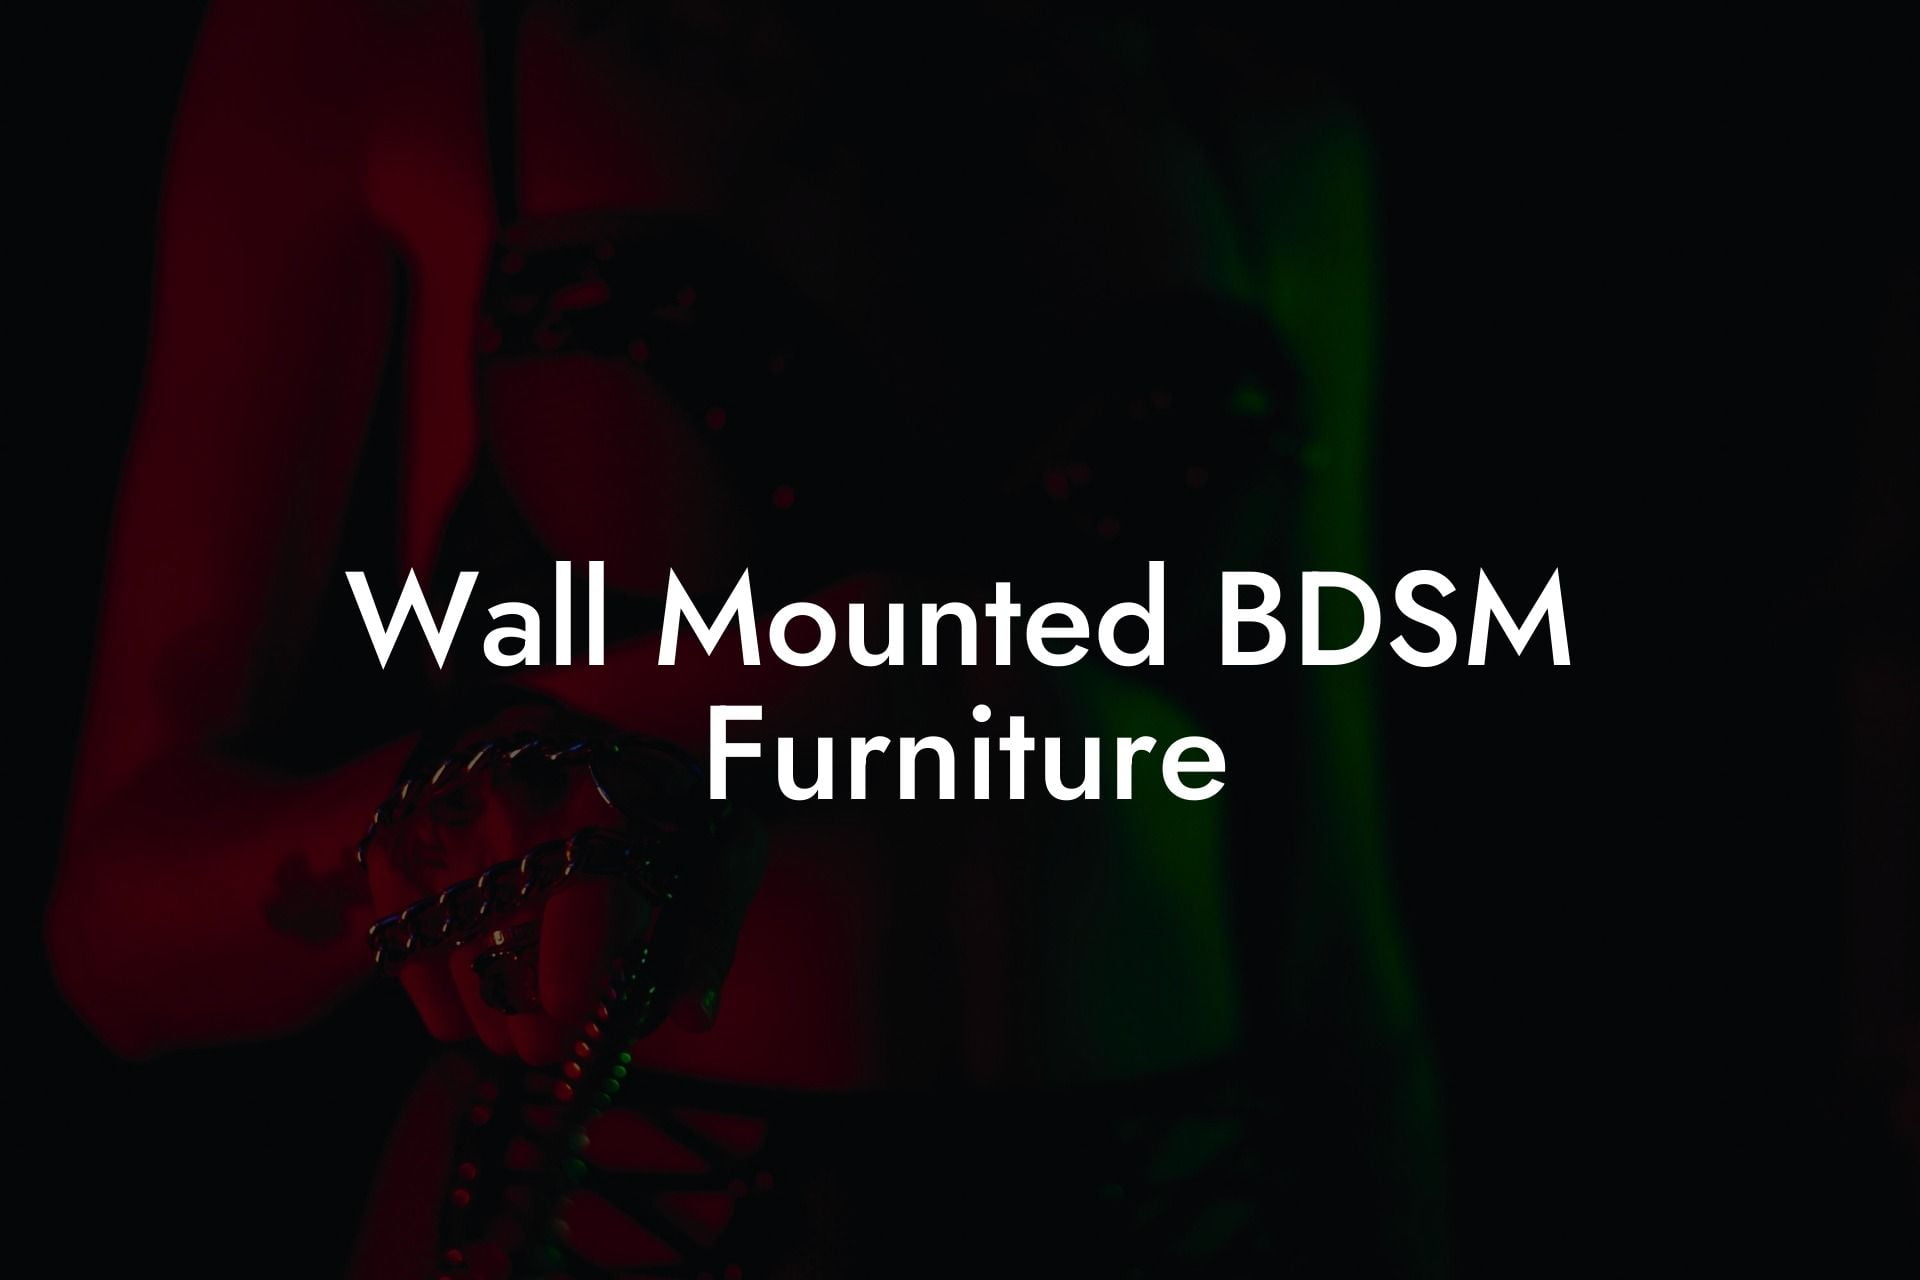 Wall Mounted BDSM Furniture